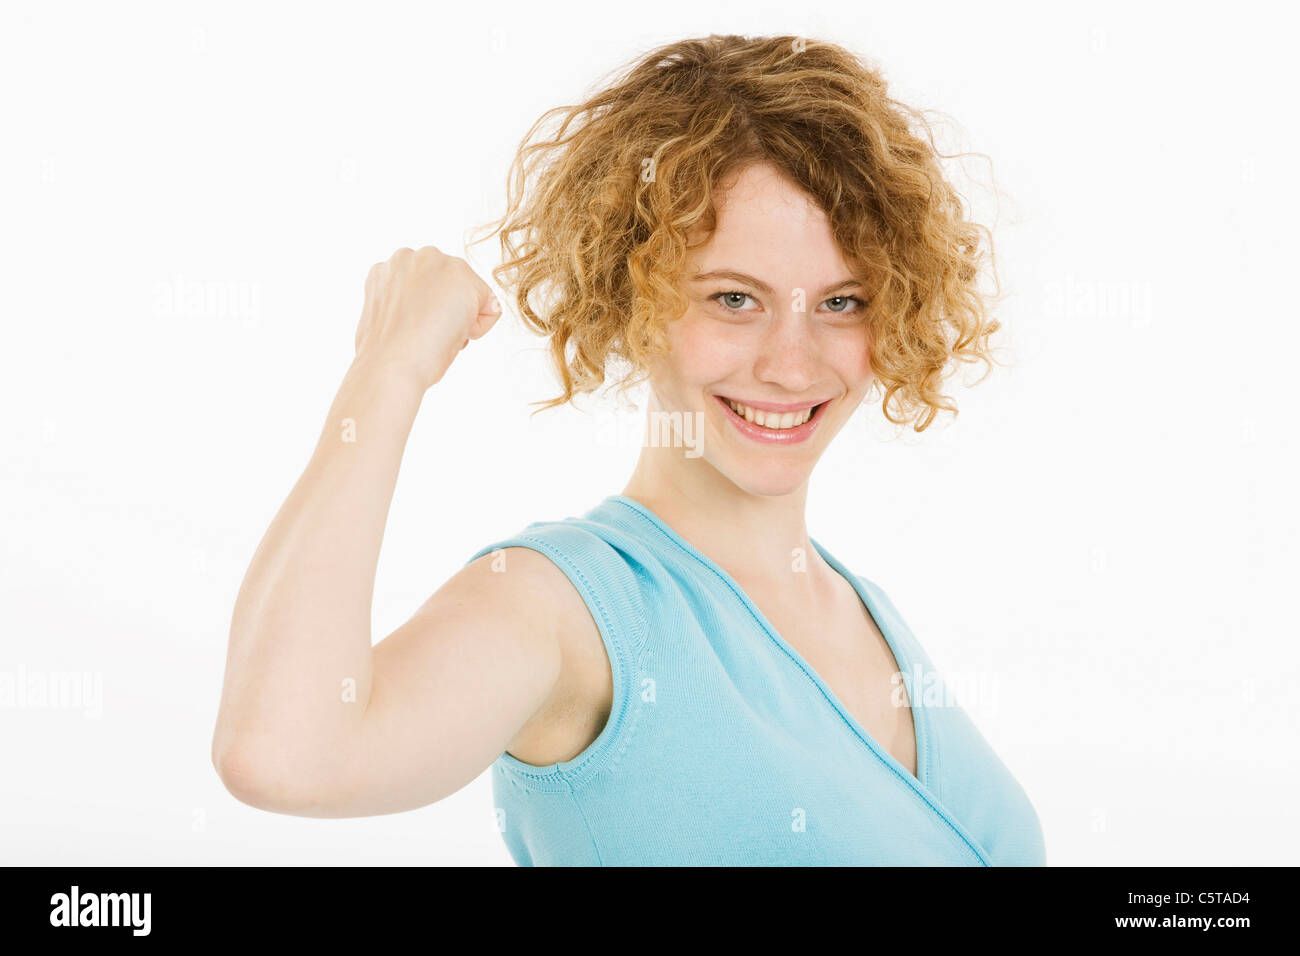 Young woman making fist, smiling, portrait Banque D'Images